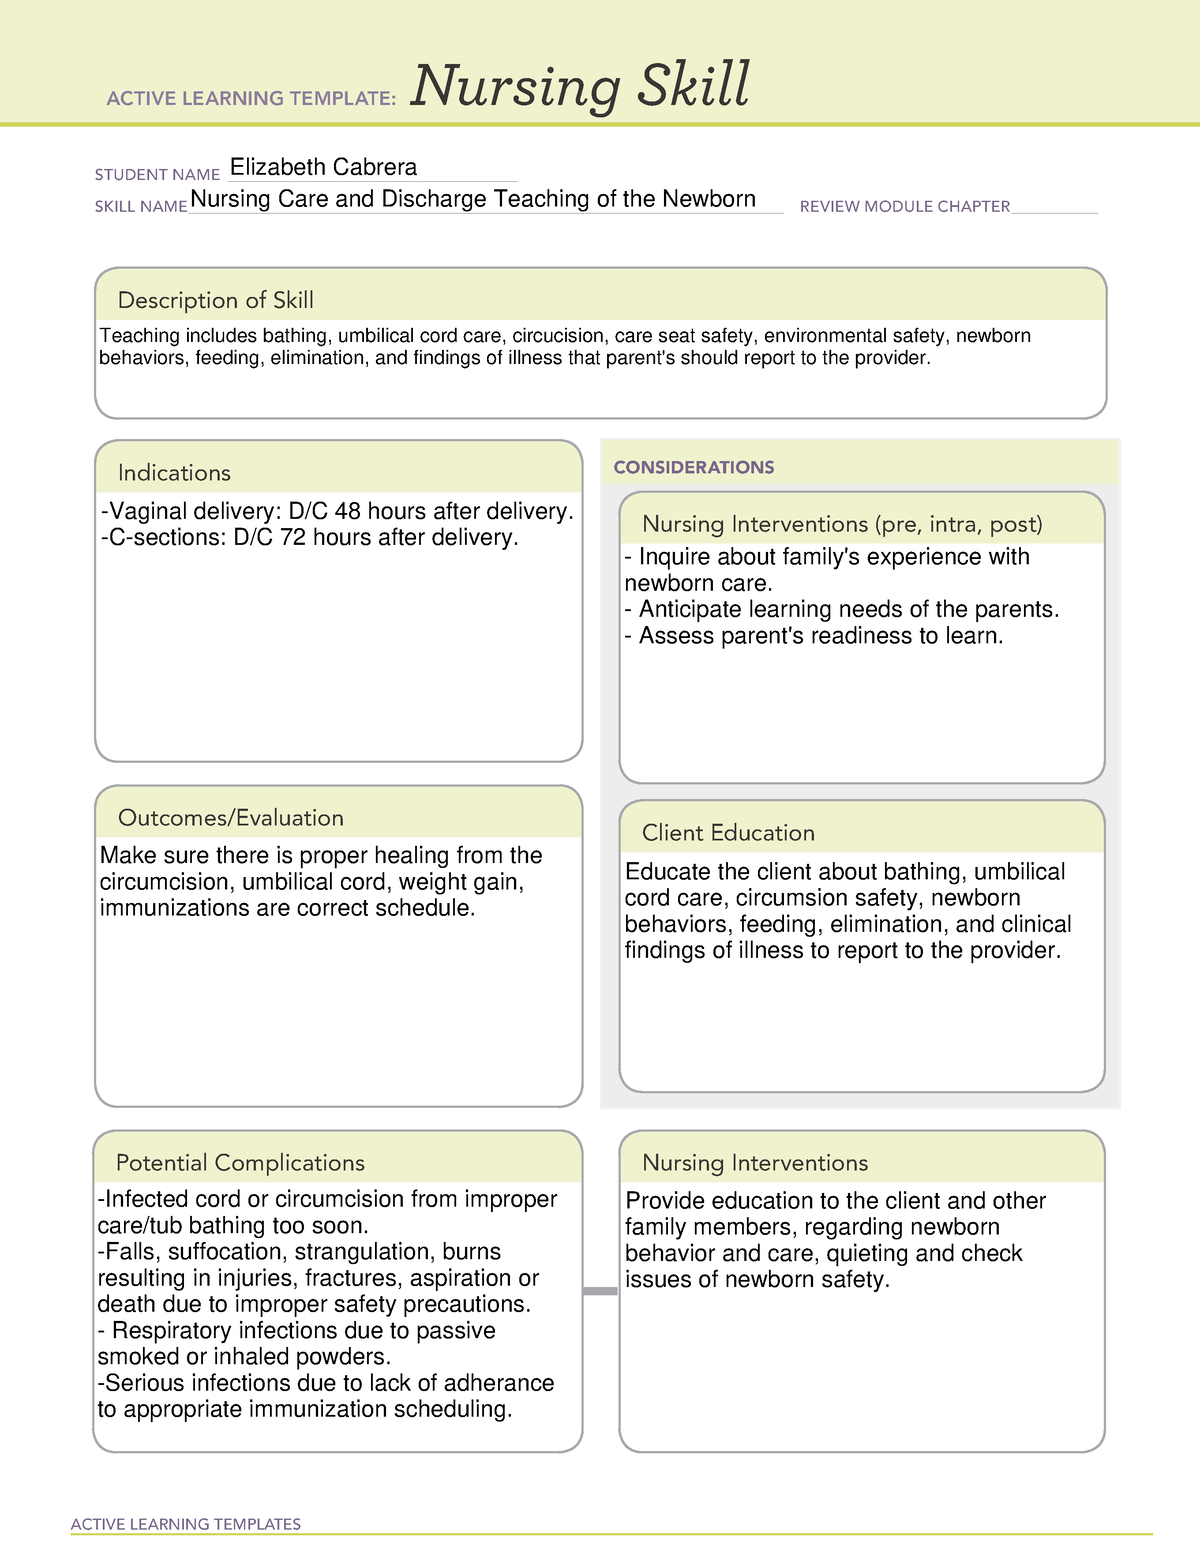 discharge-ati-maternal-newborn-skill-sheet-active-learning-templates-nursing-skill-student